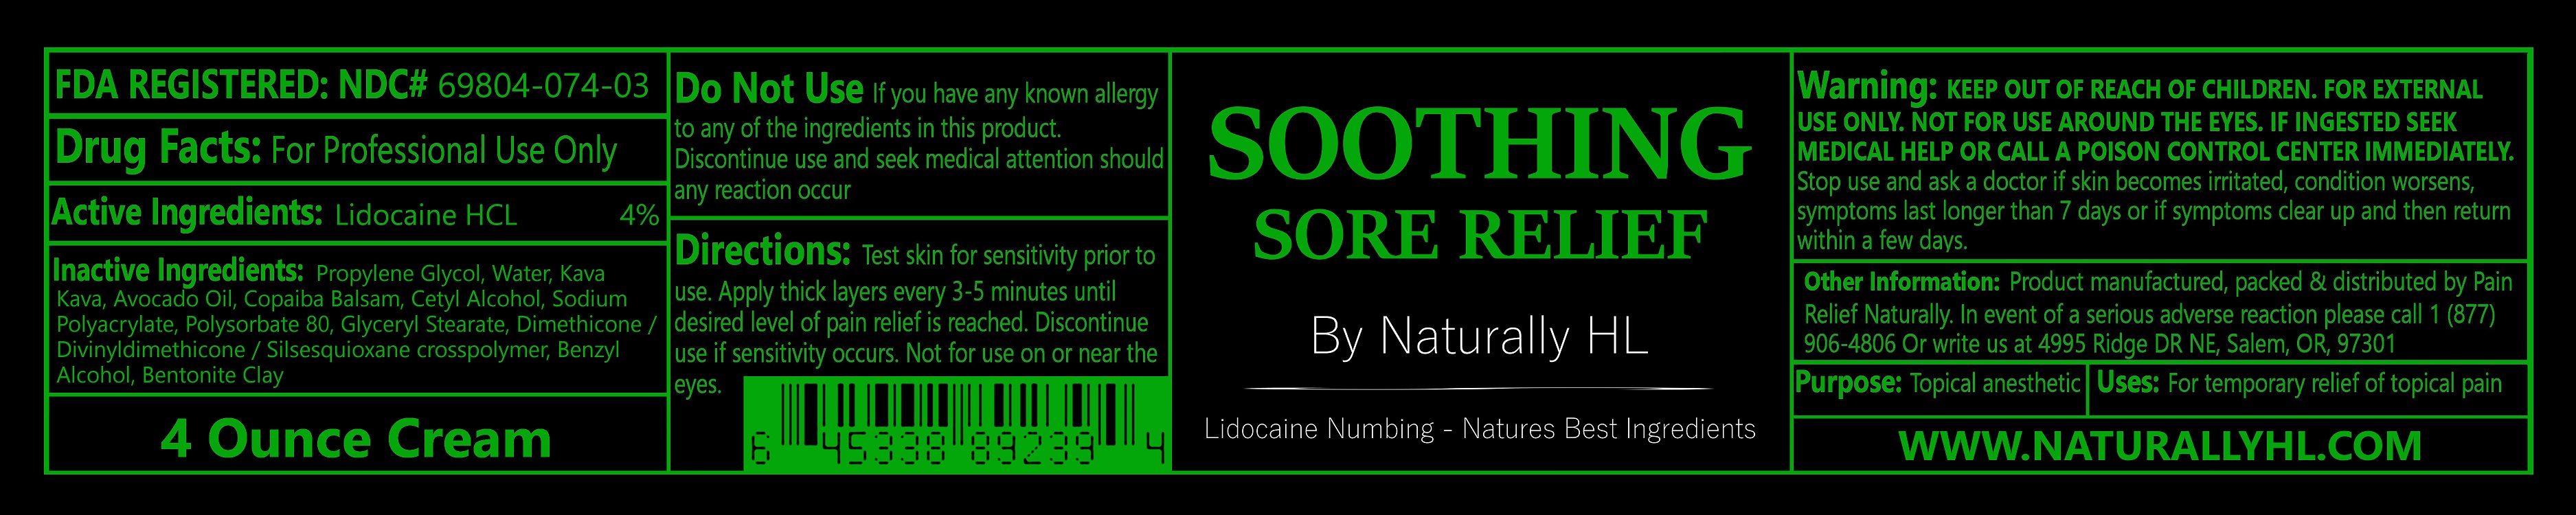 Sore Relief | Lidocaine Hcl Cream while Breastfeeding